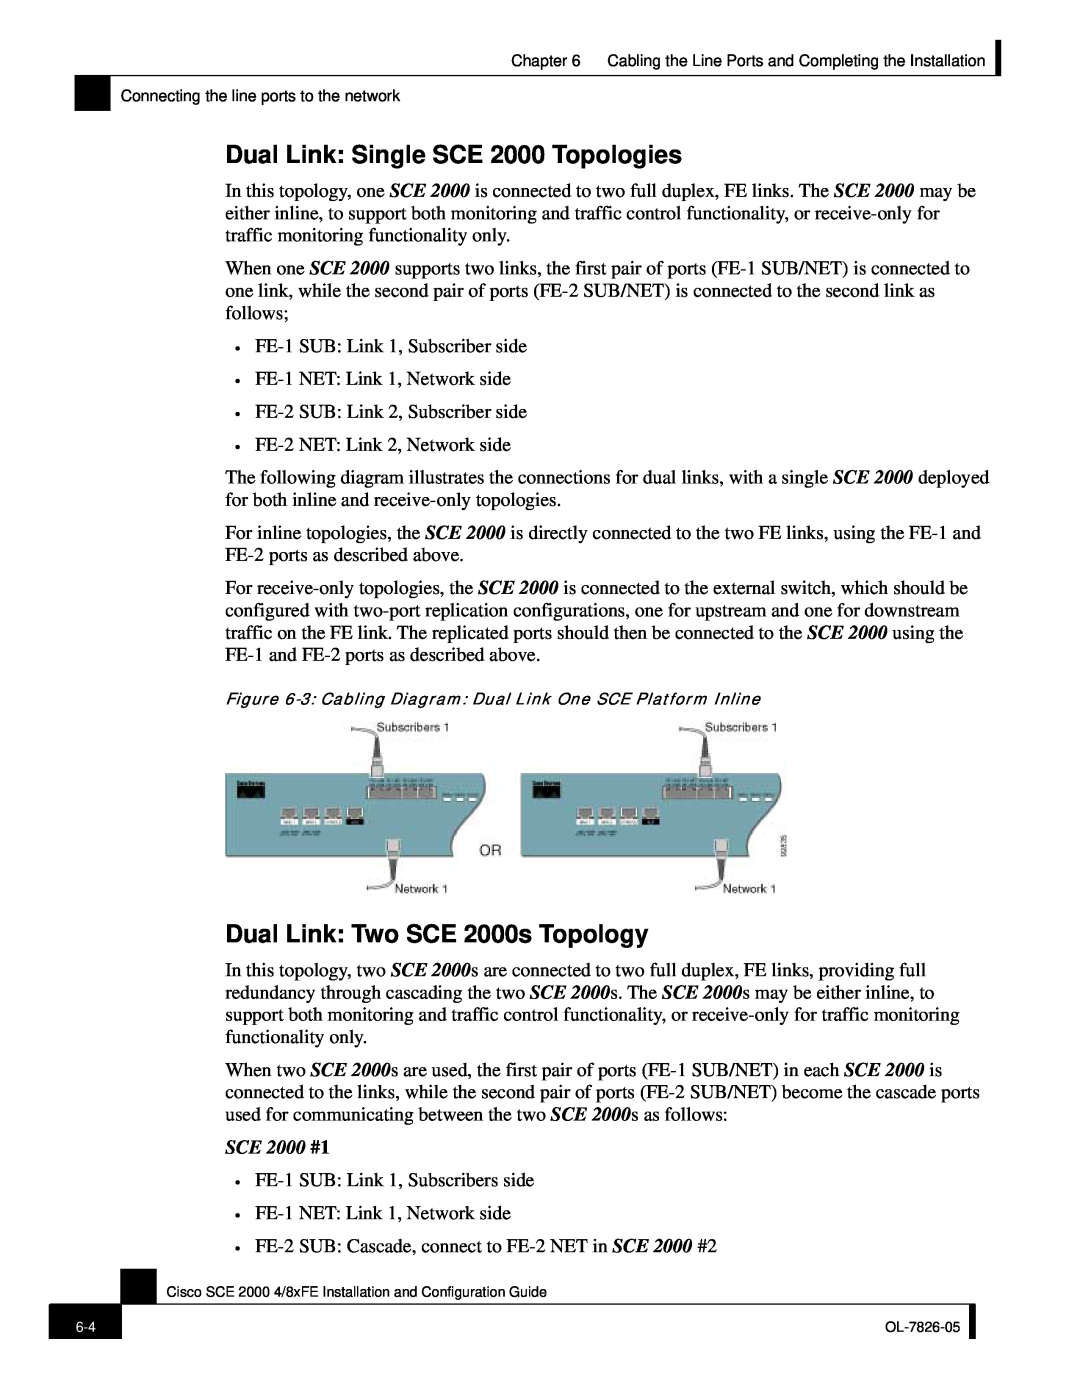 Cisco Systems SCE 2000 4/8xFE manual Dual Link Single SCE 2000 Topologies, Dual Link Two SCE 2000s Topology, SCE 2000 #1 